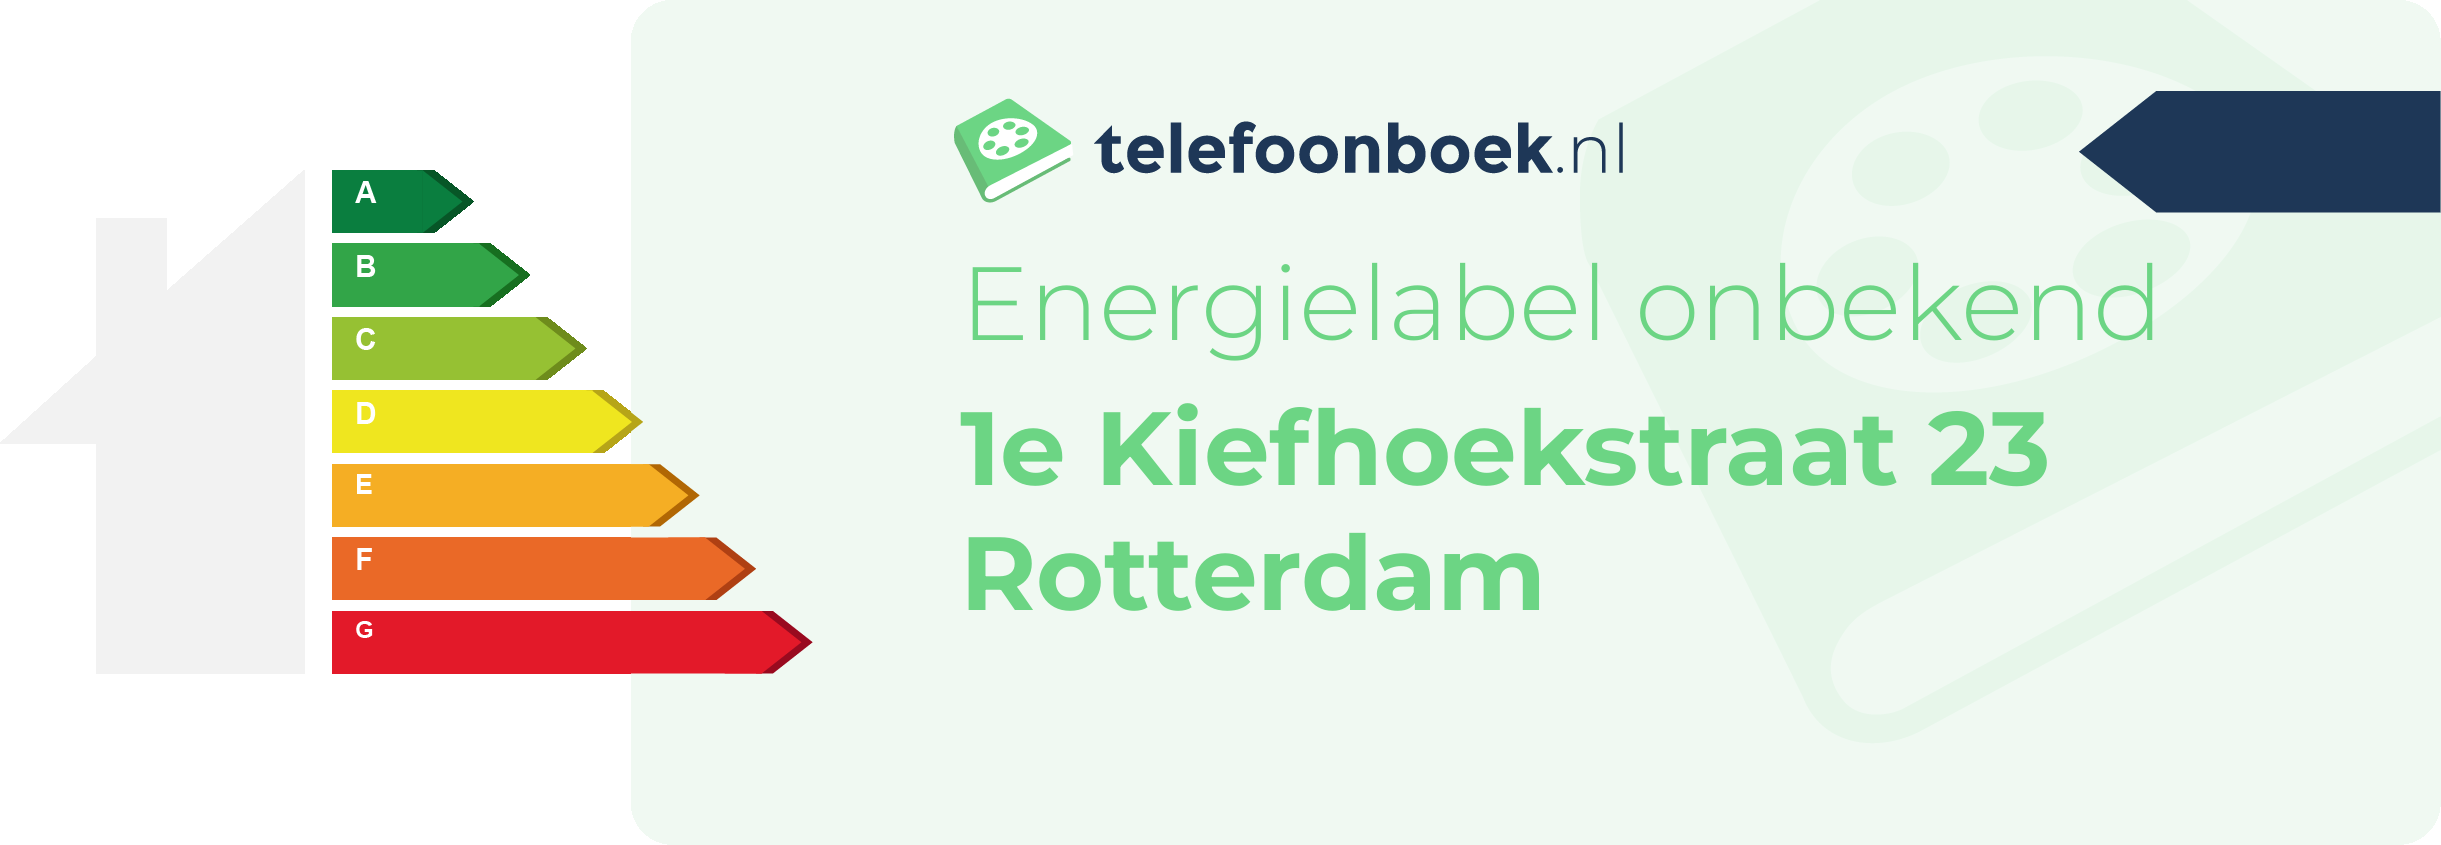 Energielabel 1e Kiefhoekstraat 23 Rotterdam